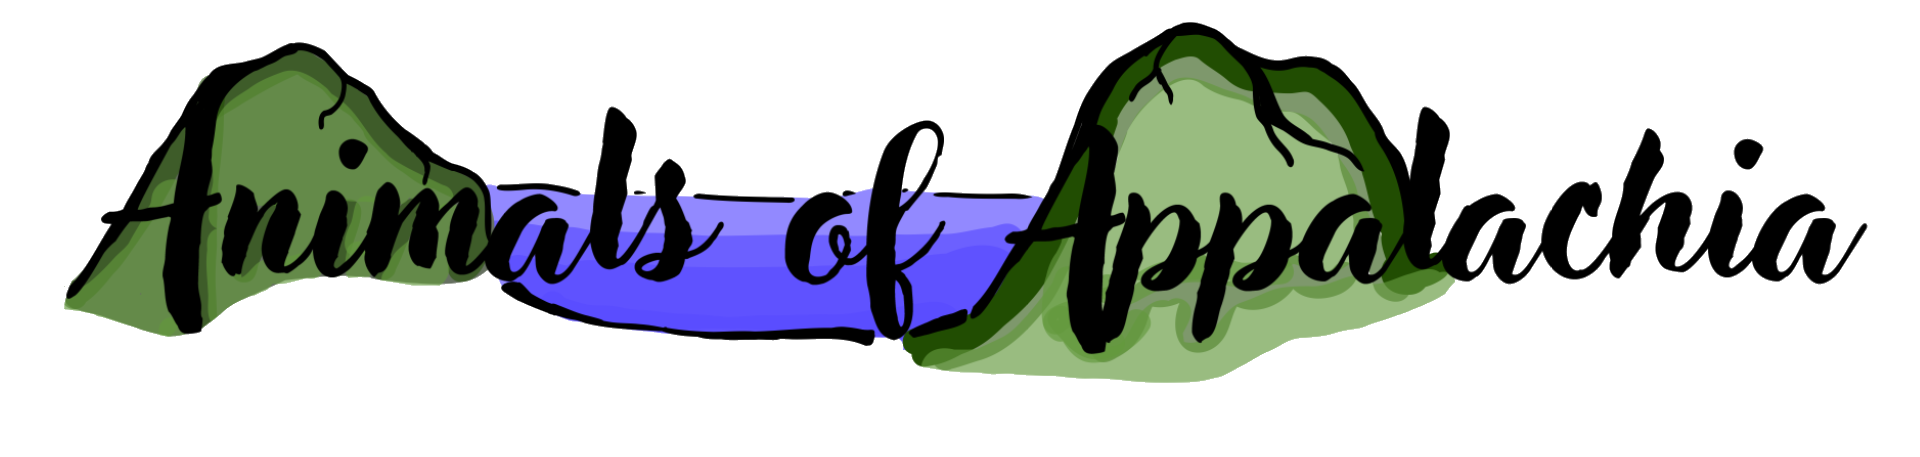 Animals of Appalachia Logo horizontal